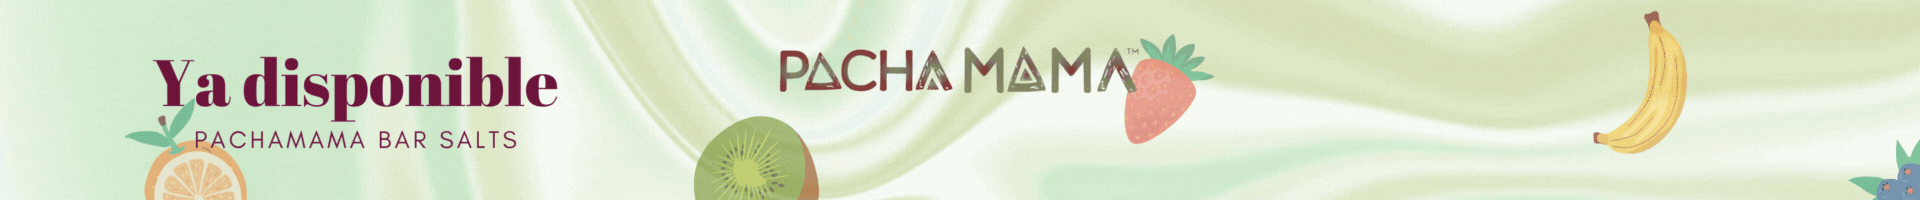 banners nuevos pachamama